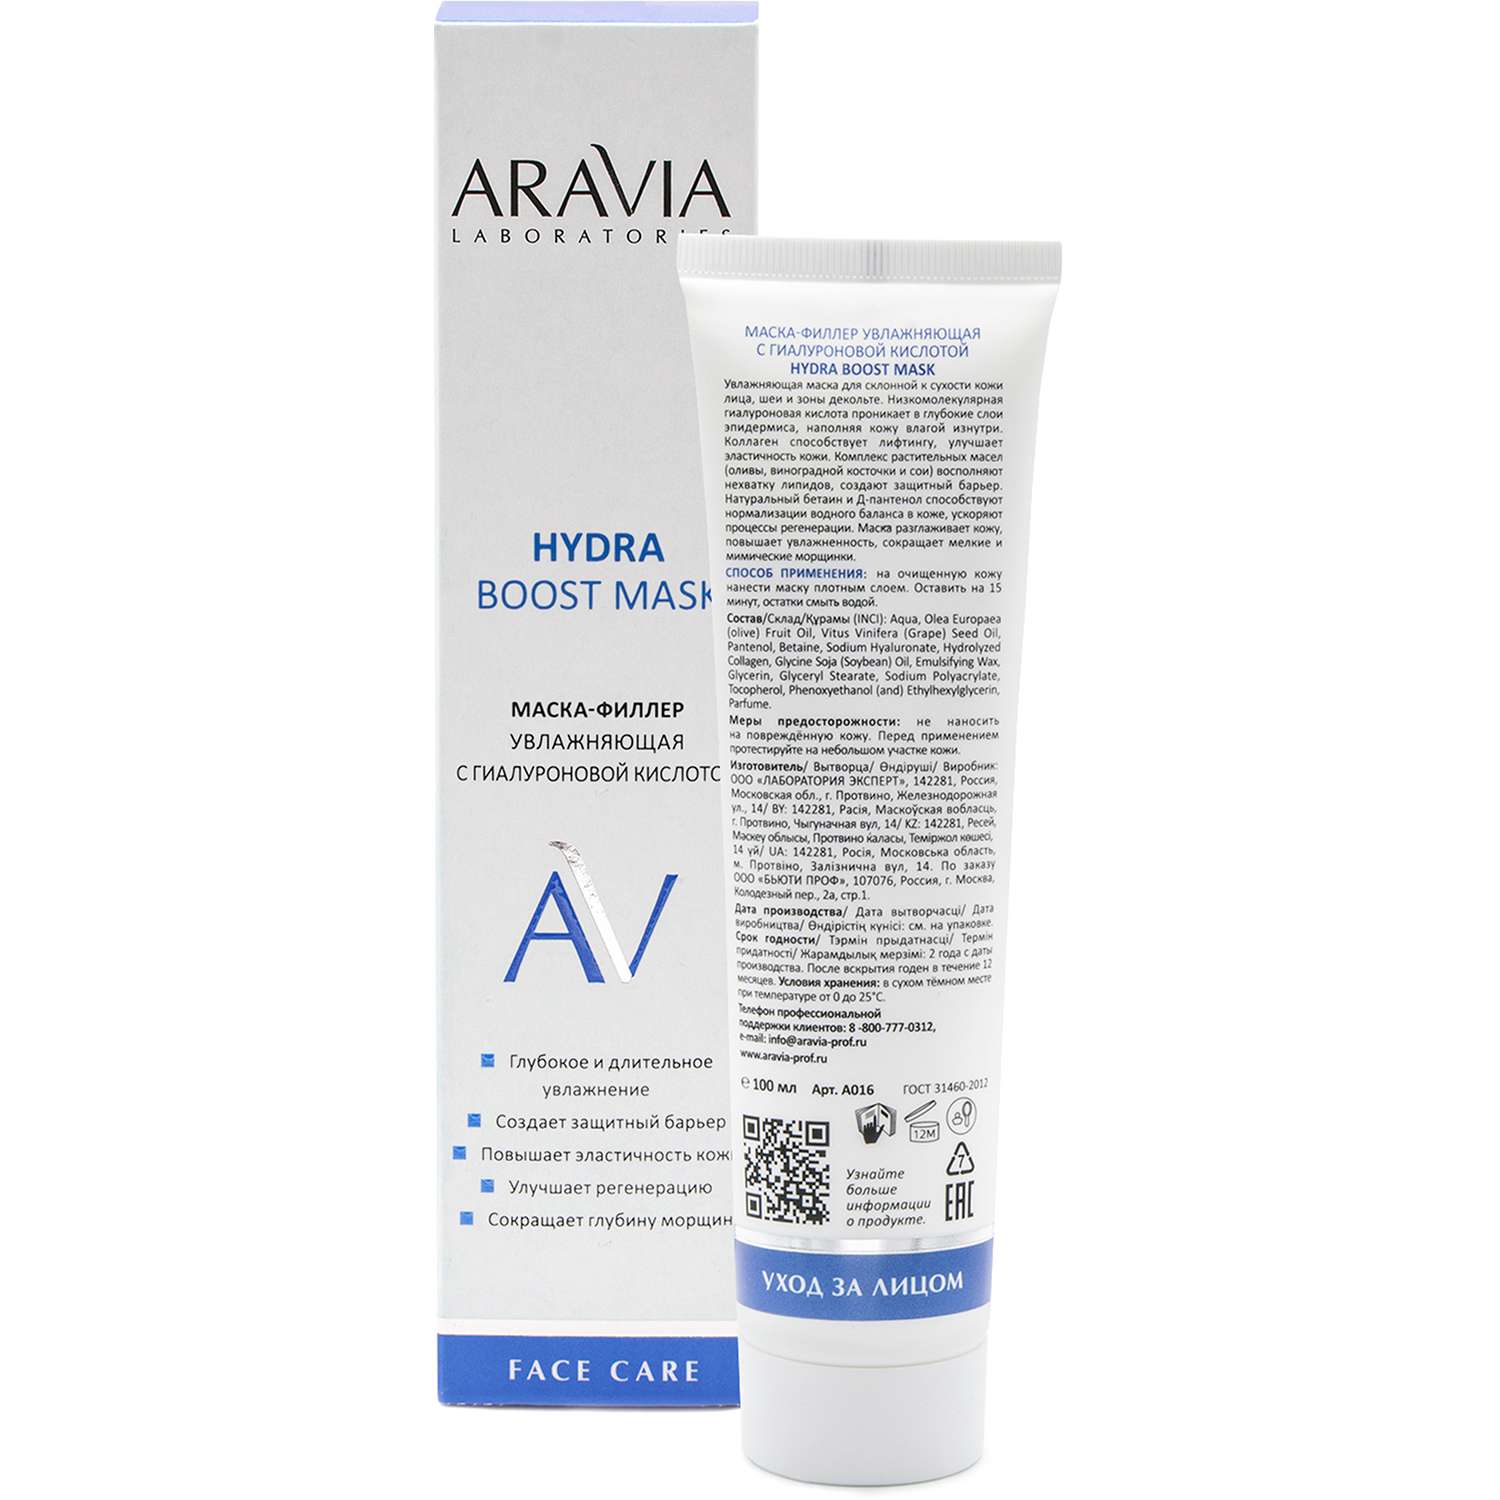 Маска-филлер для лица ARAVIA Laboratories с гиалуроновой кислотой Hydra Boost Mask 100 мл - фото 2